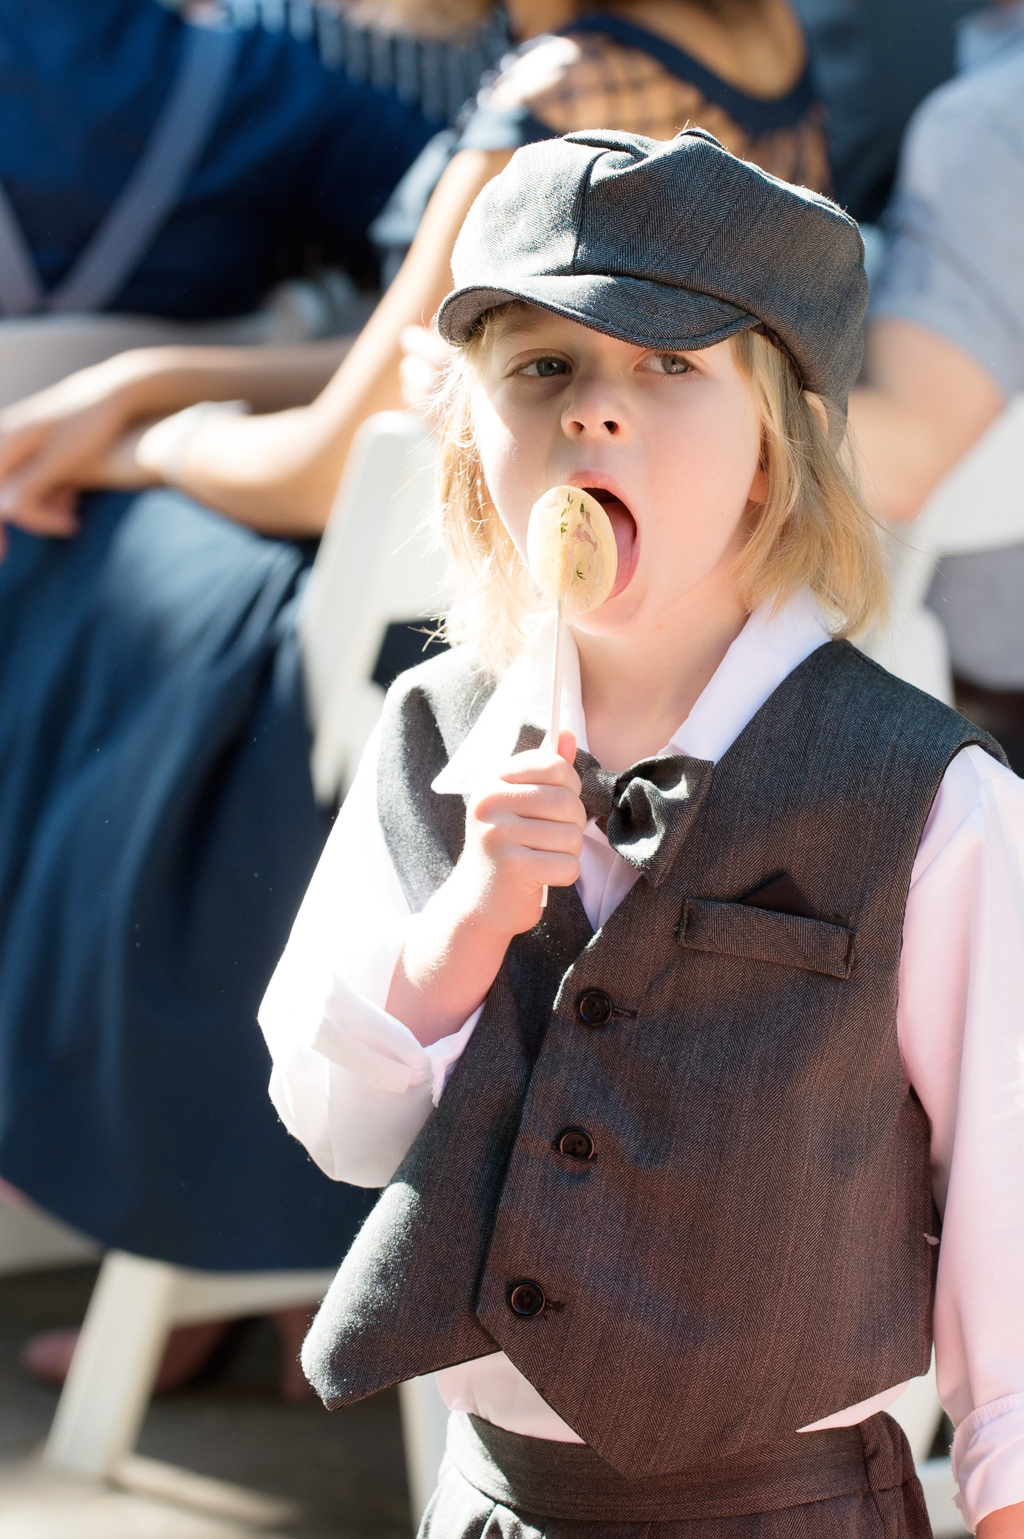 a young boy in a page boy cap licks a lollipop